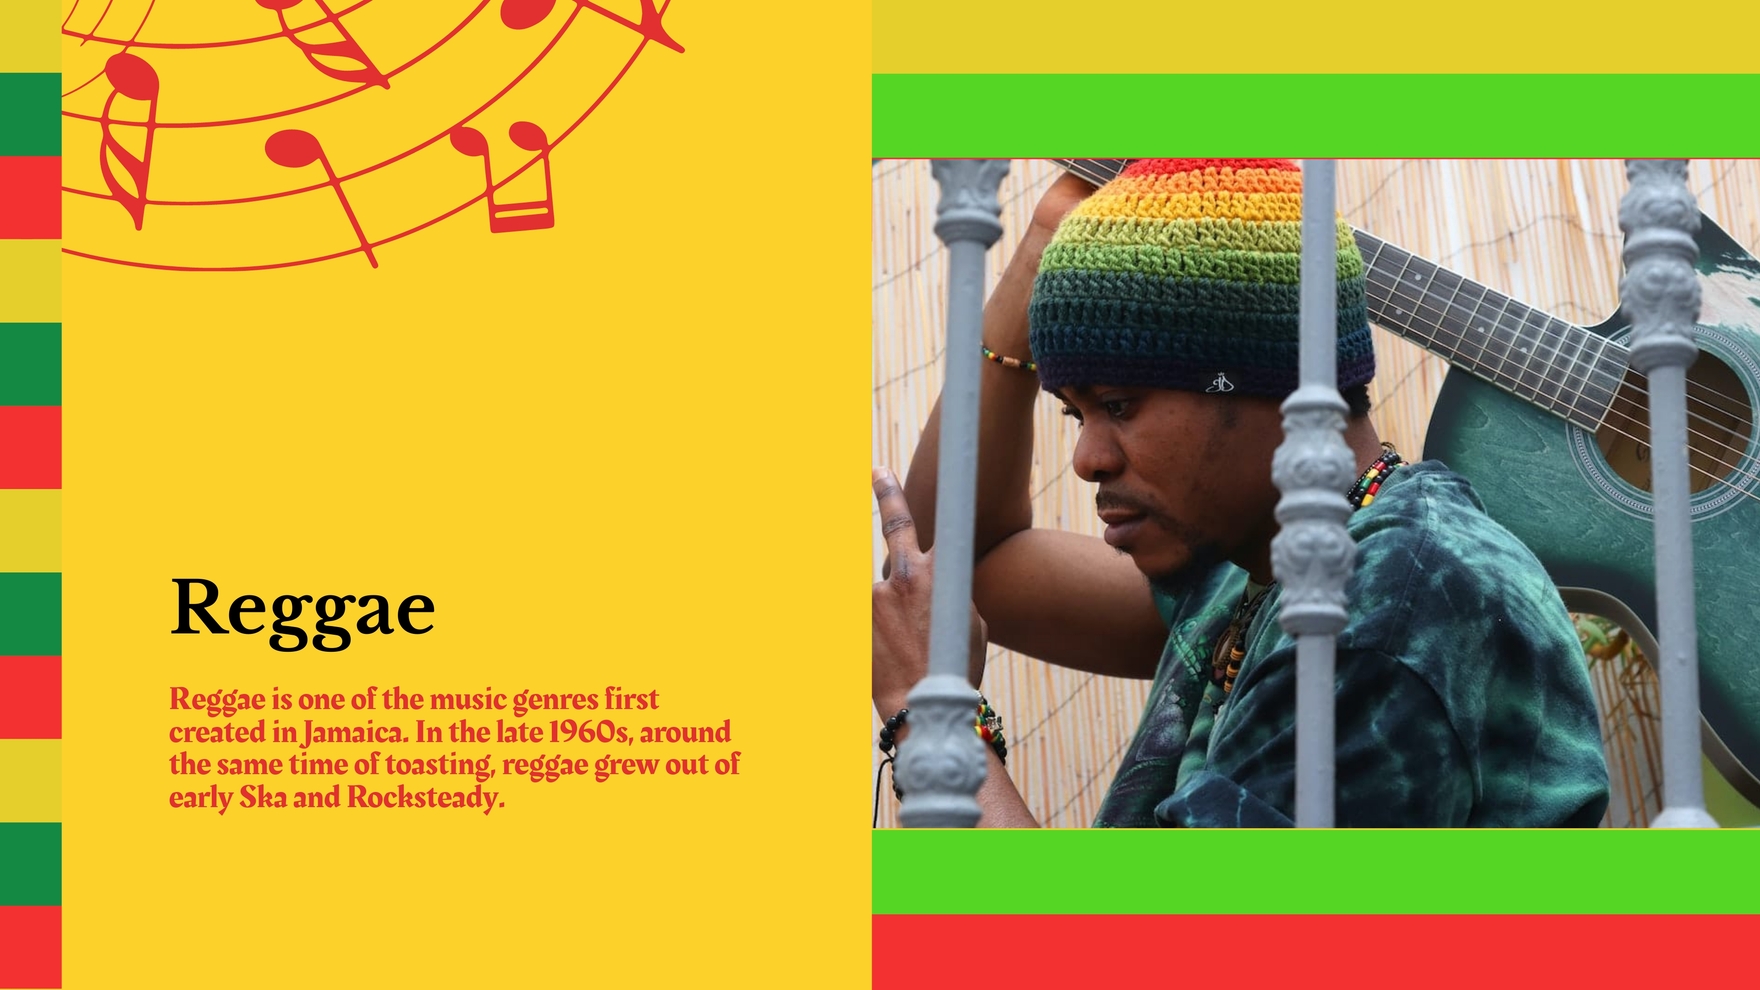 Jamaican Music Festival Presentation Template